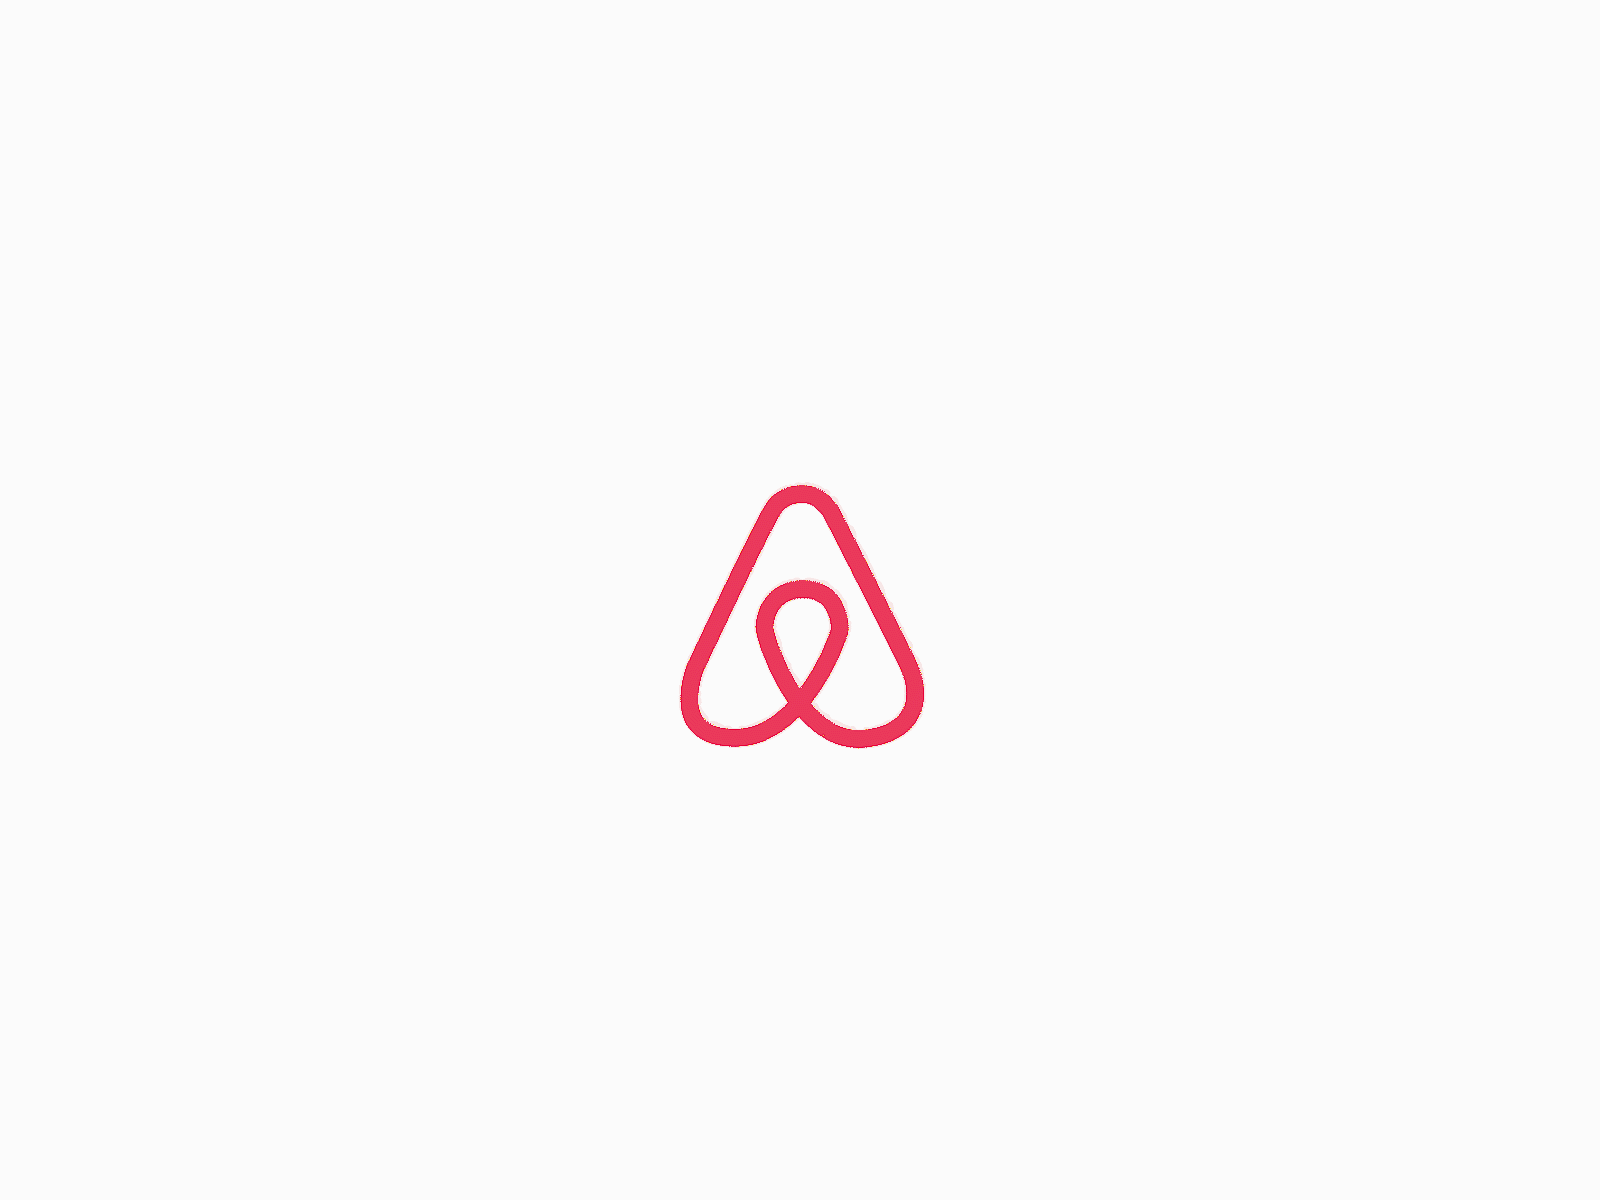 Airbnb logo animation by Ashhar Shams on Dribbble